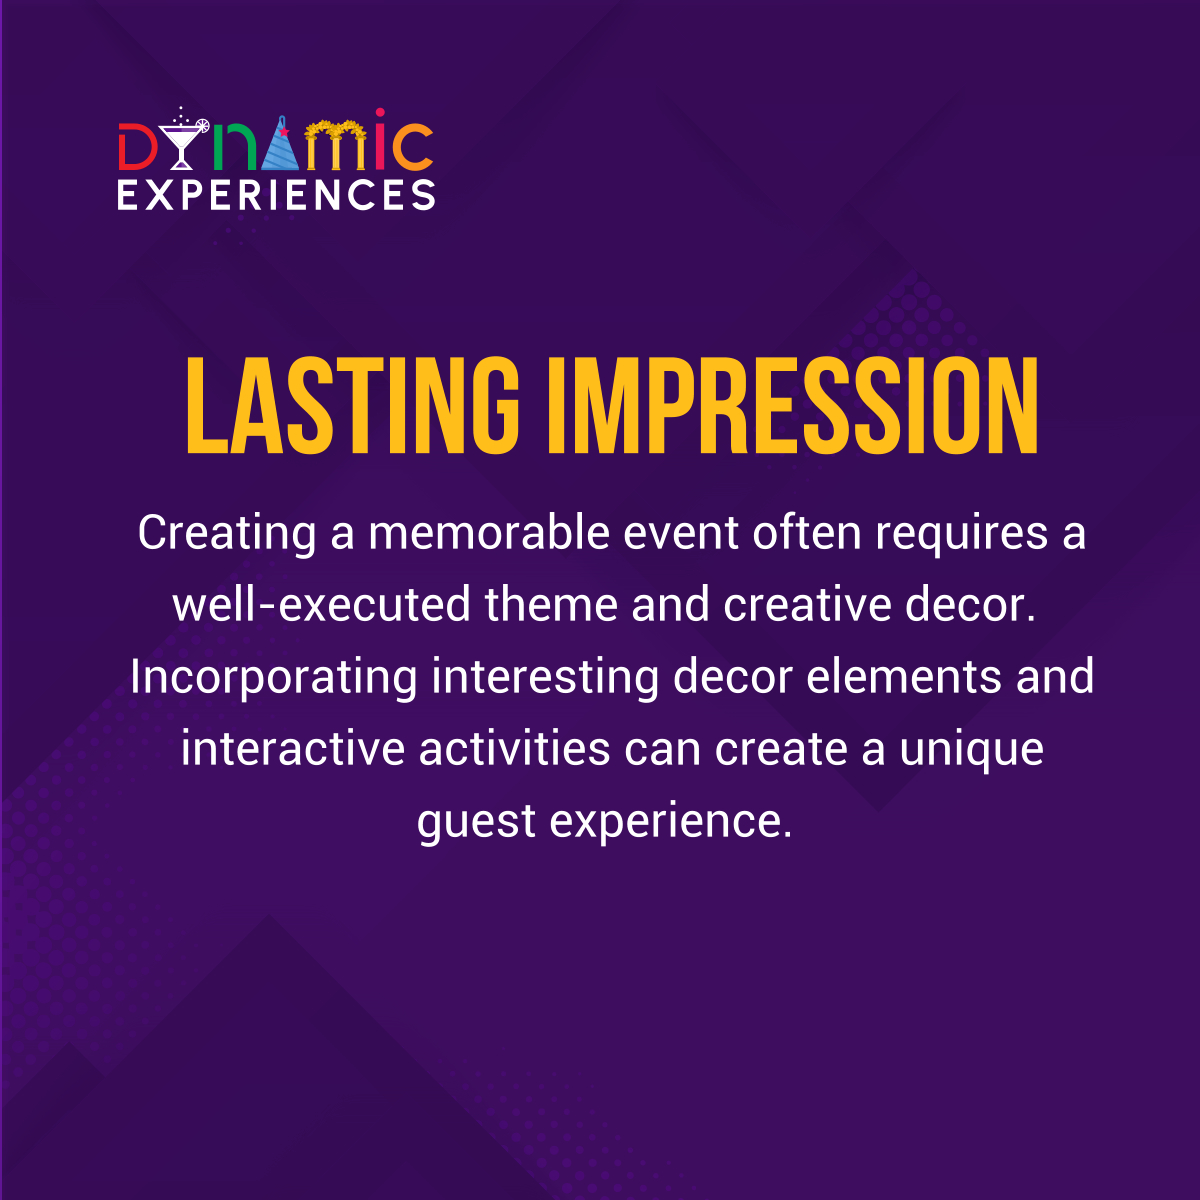 Lasting Impression

#LastingImpression #MemorableEvent #DynamicExperiences #EventPlanning #EastPointGA